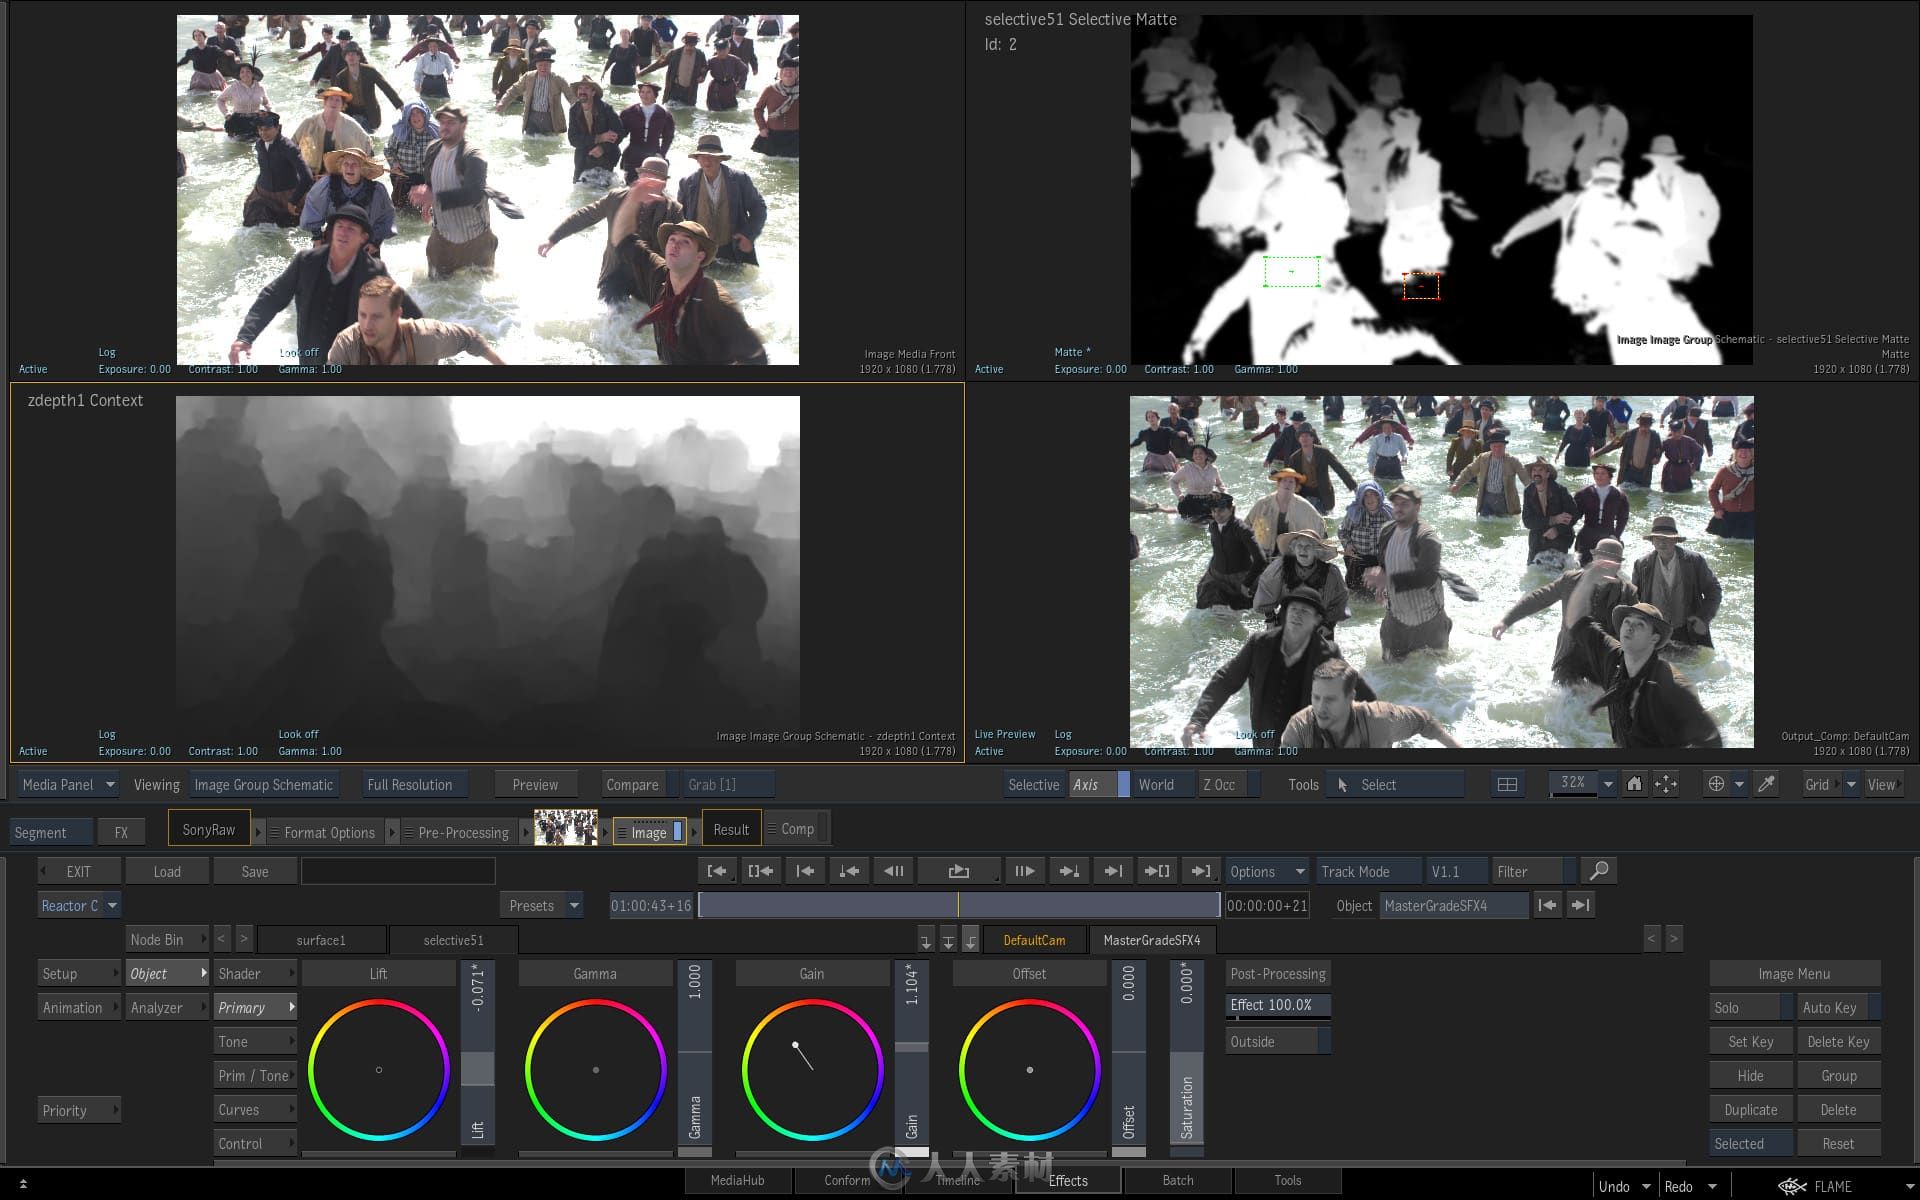 Autodesk Flame 2020高端电影剪辑和特效制作软件Mac版